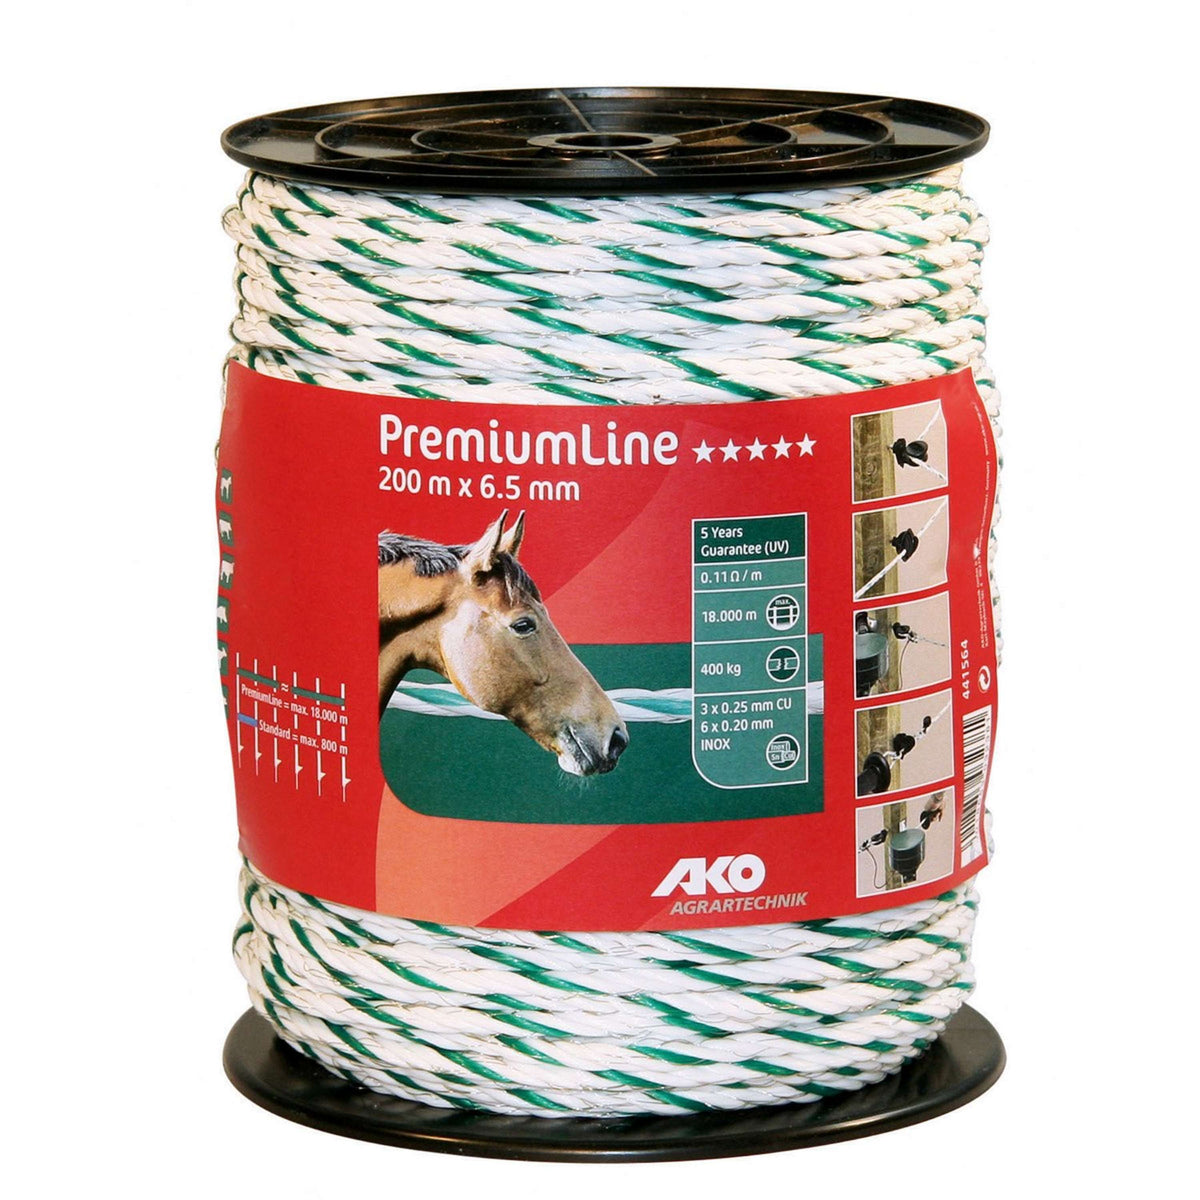 Ako Seil PremiumLine Weiß/Grün